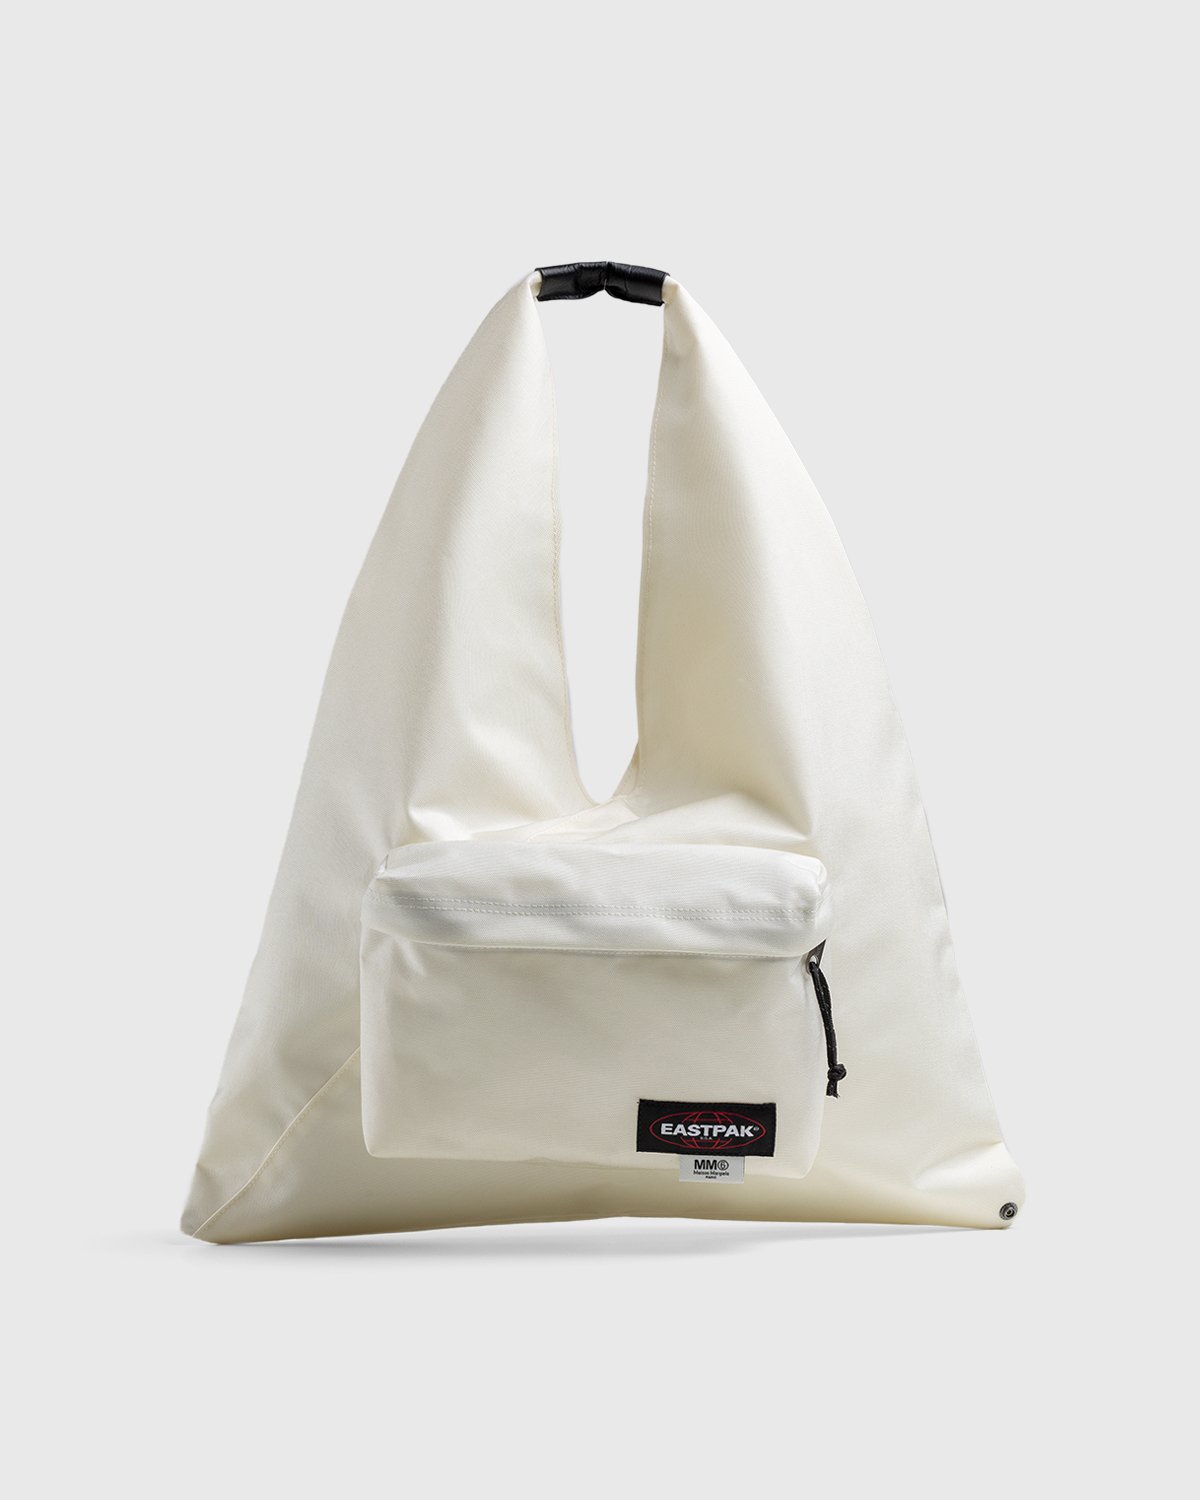 MM6 Maison Margiela x Eastpak - Borsa Shopping Bag White - Accessories - White - Image 1